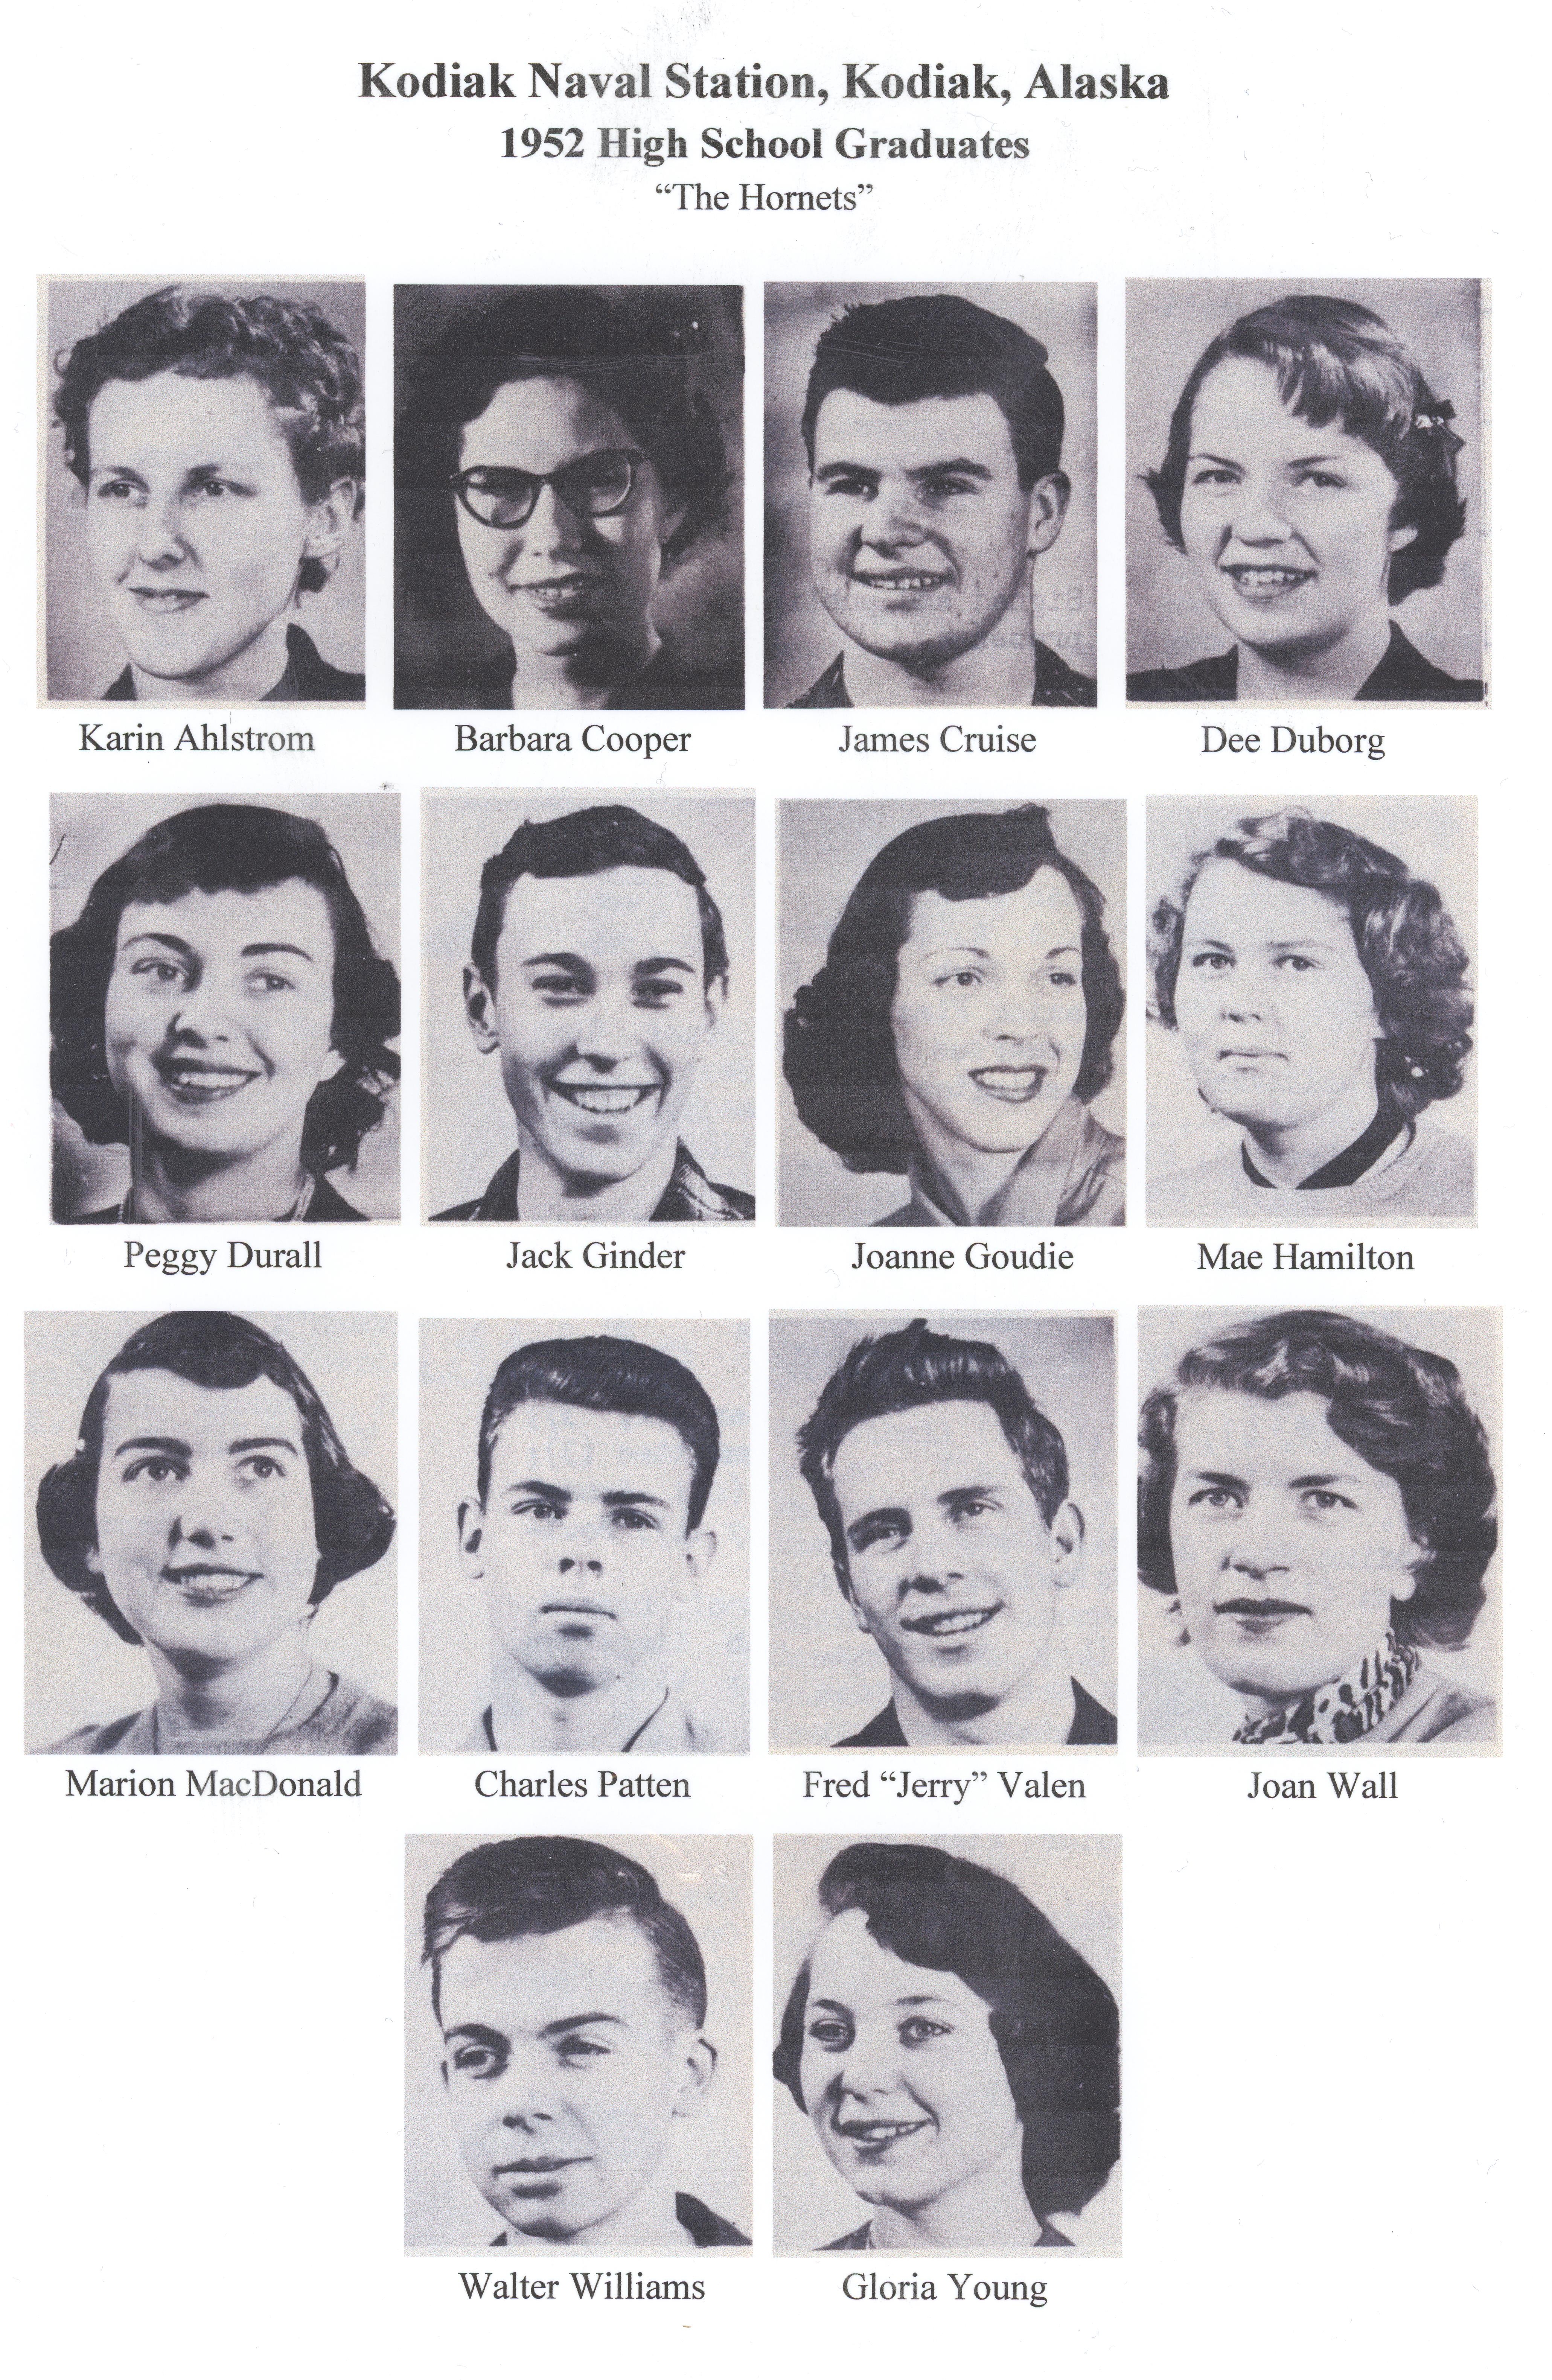 1952 KNS High School graduates